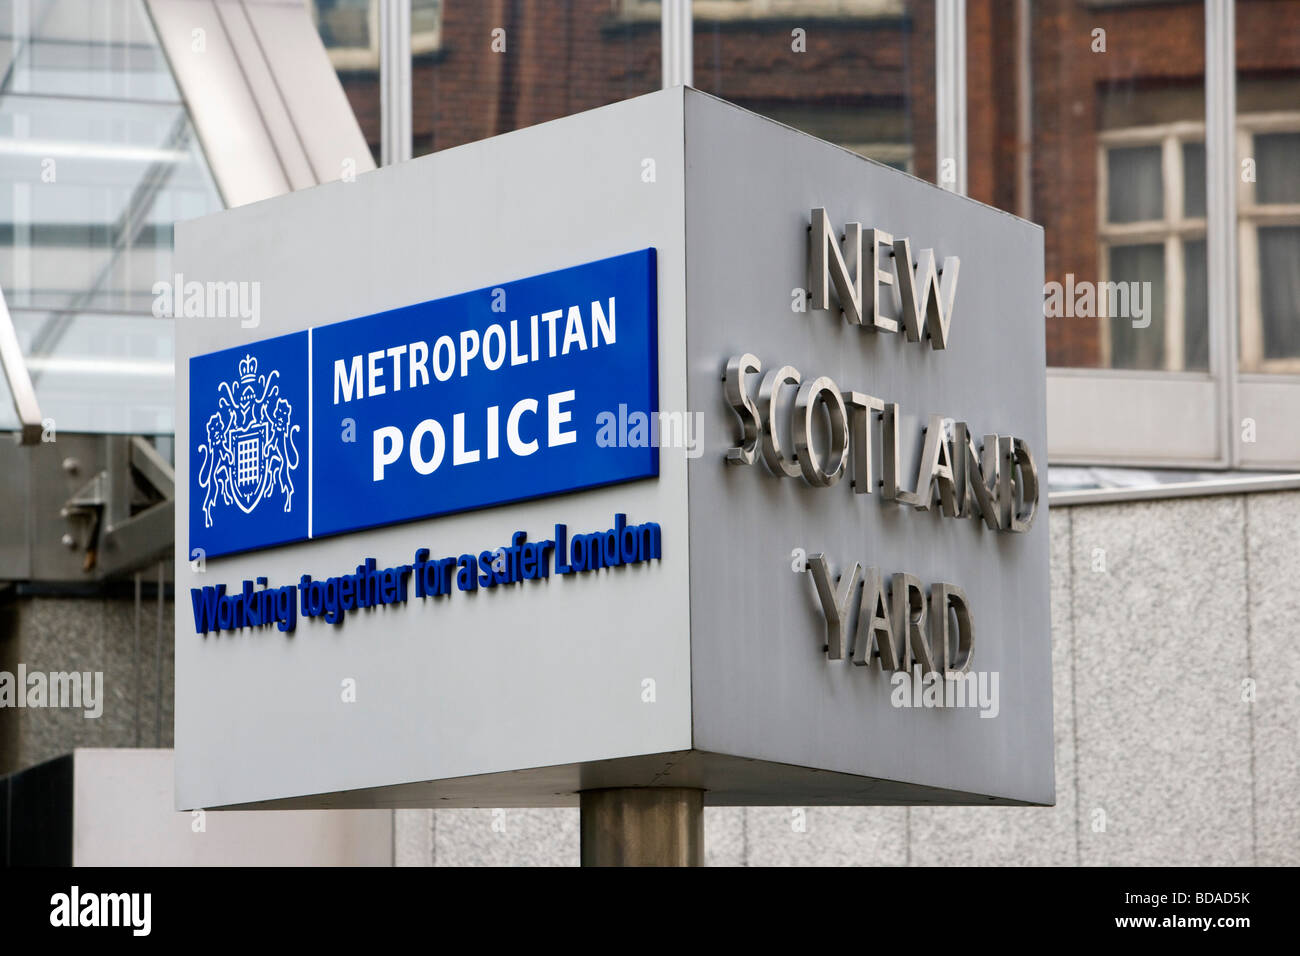 Metropolitan Police sign New Scotland Yard London England Great Britain Saturday July 04 2009 Stock Photo